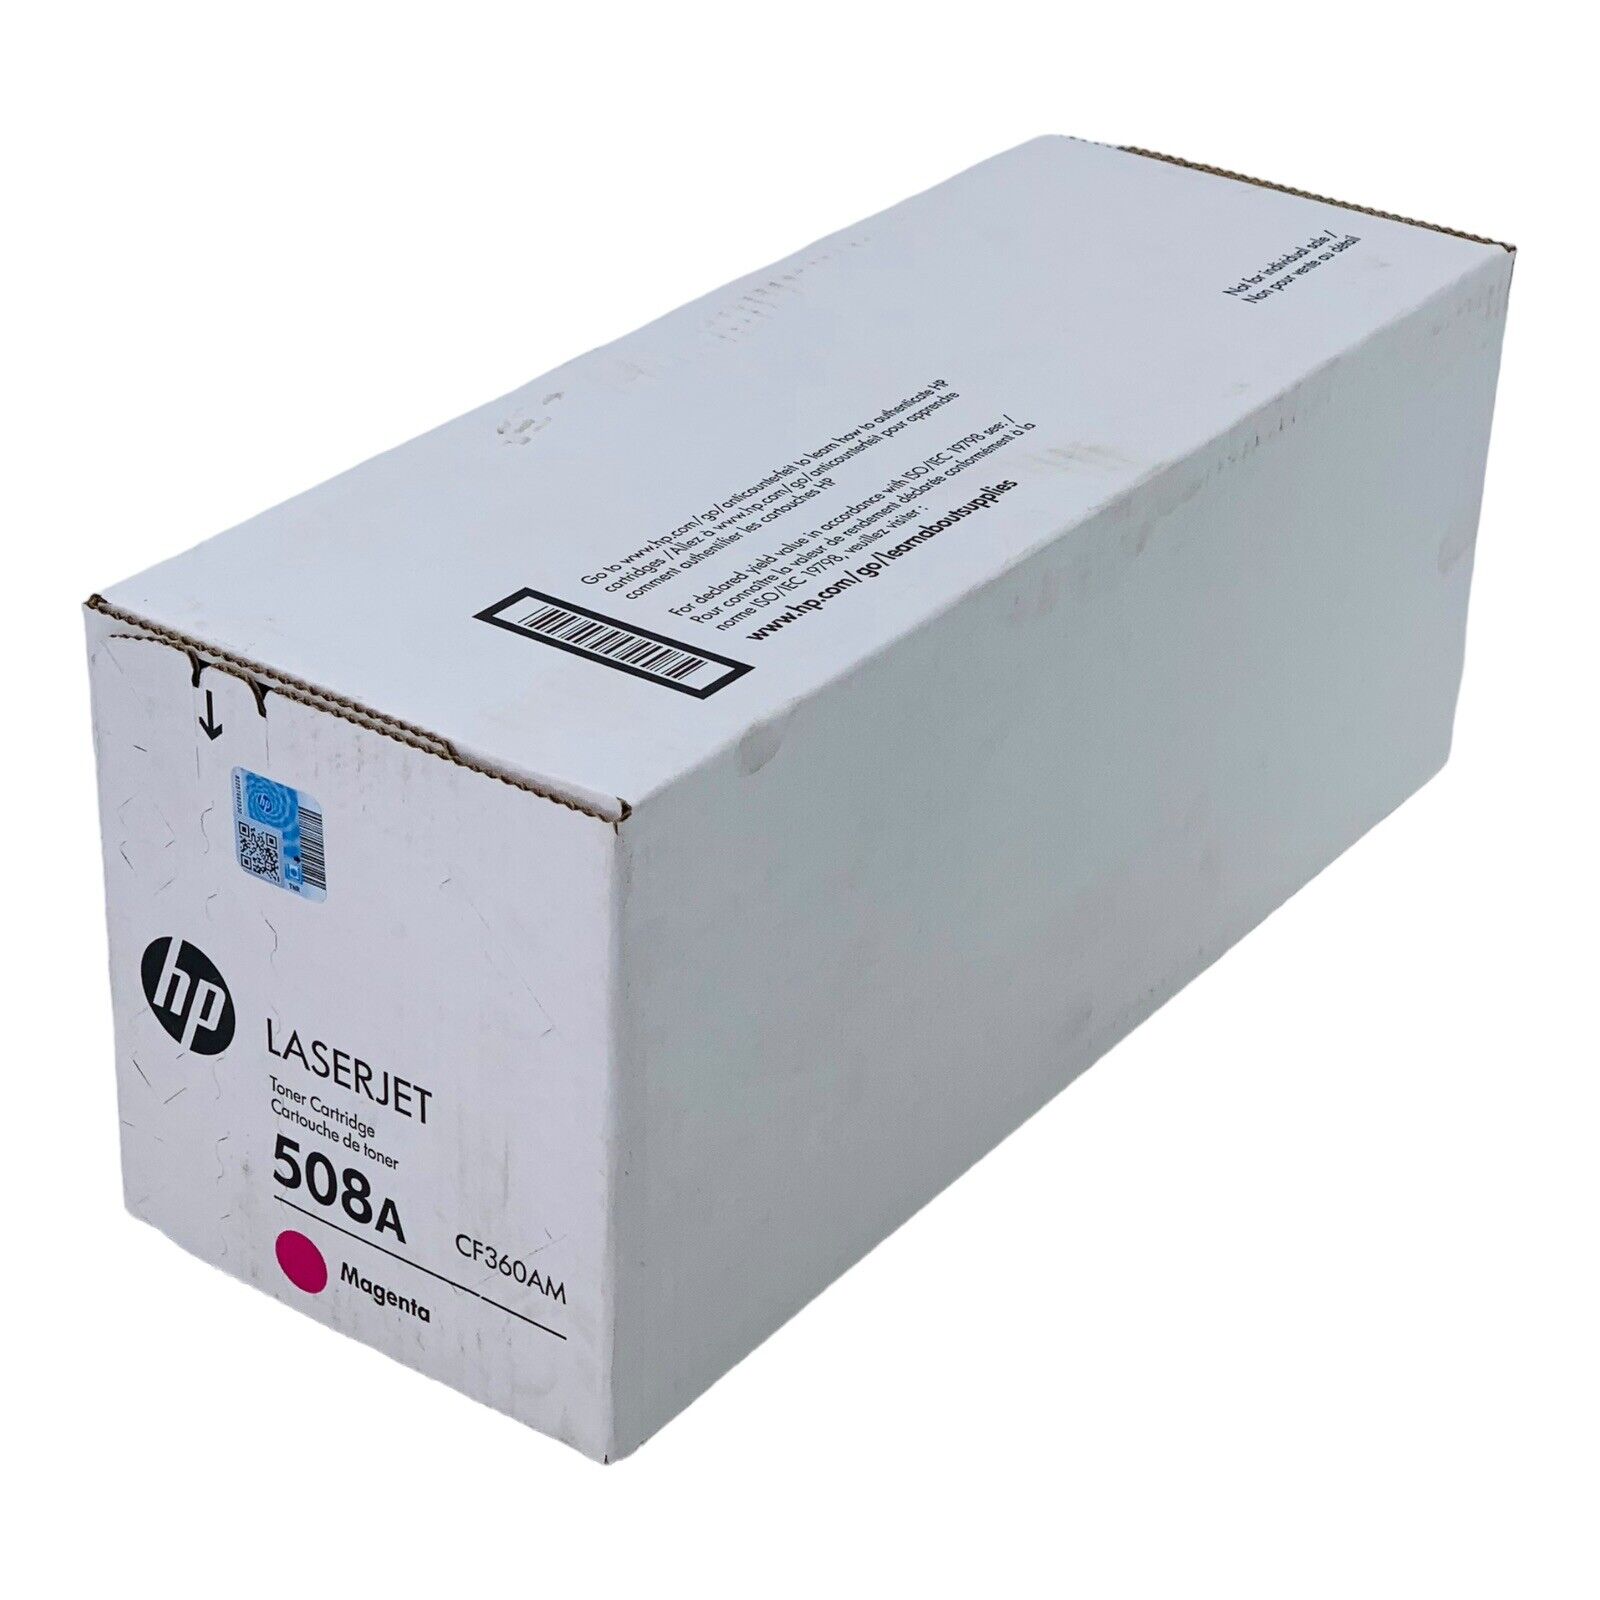 Genuine HP 508A Magenta Toner Cartridge - Sealed Box